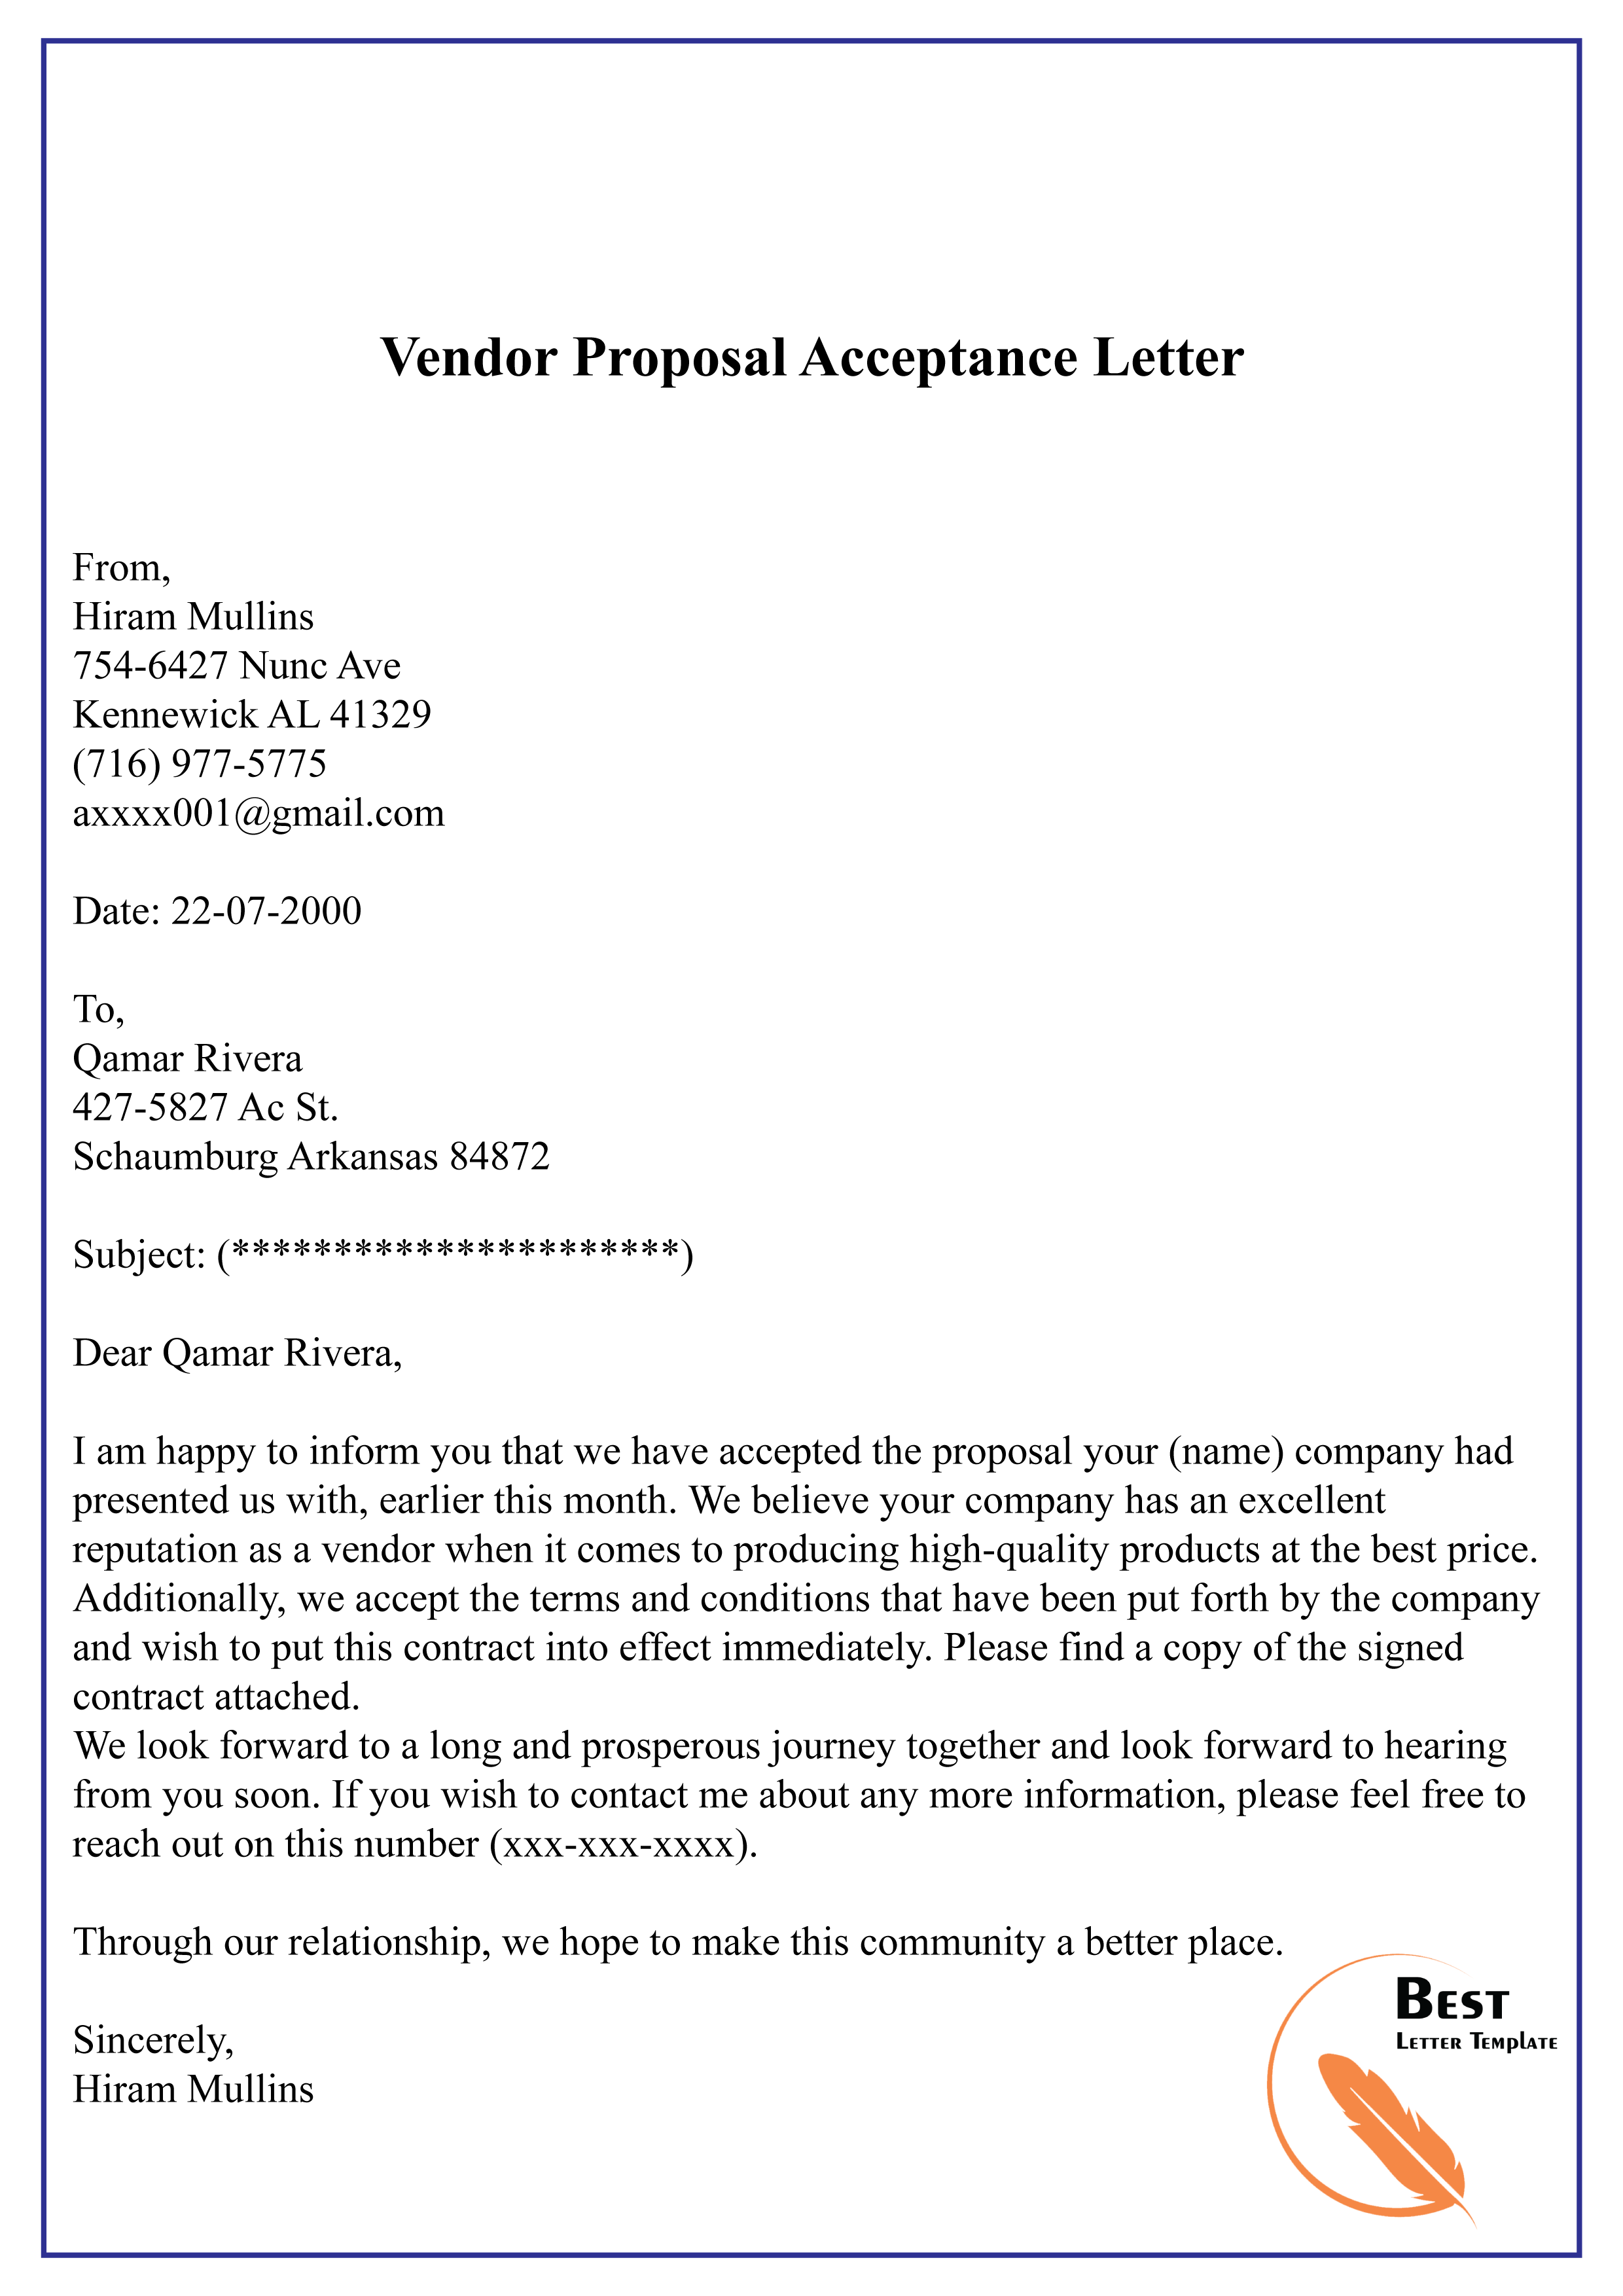 Vendor Proposal Acceptance Letter